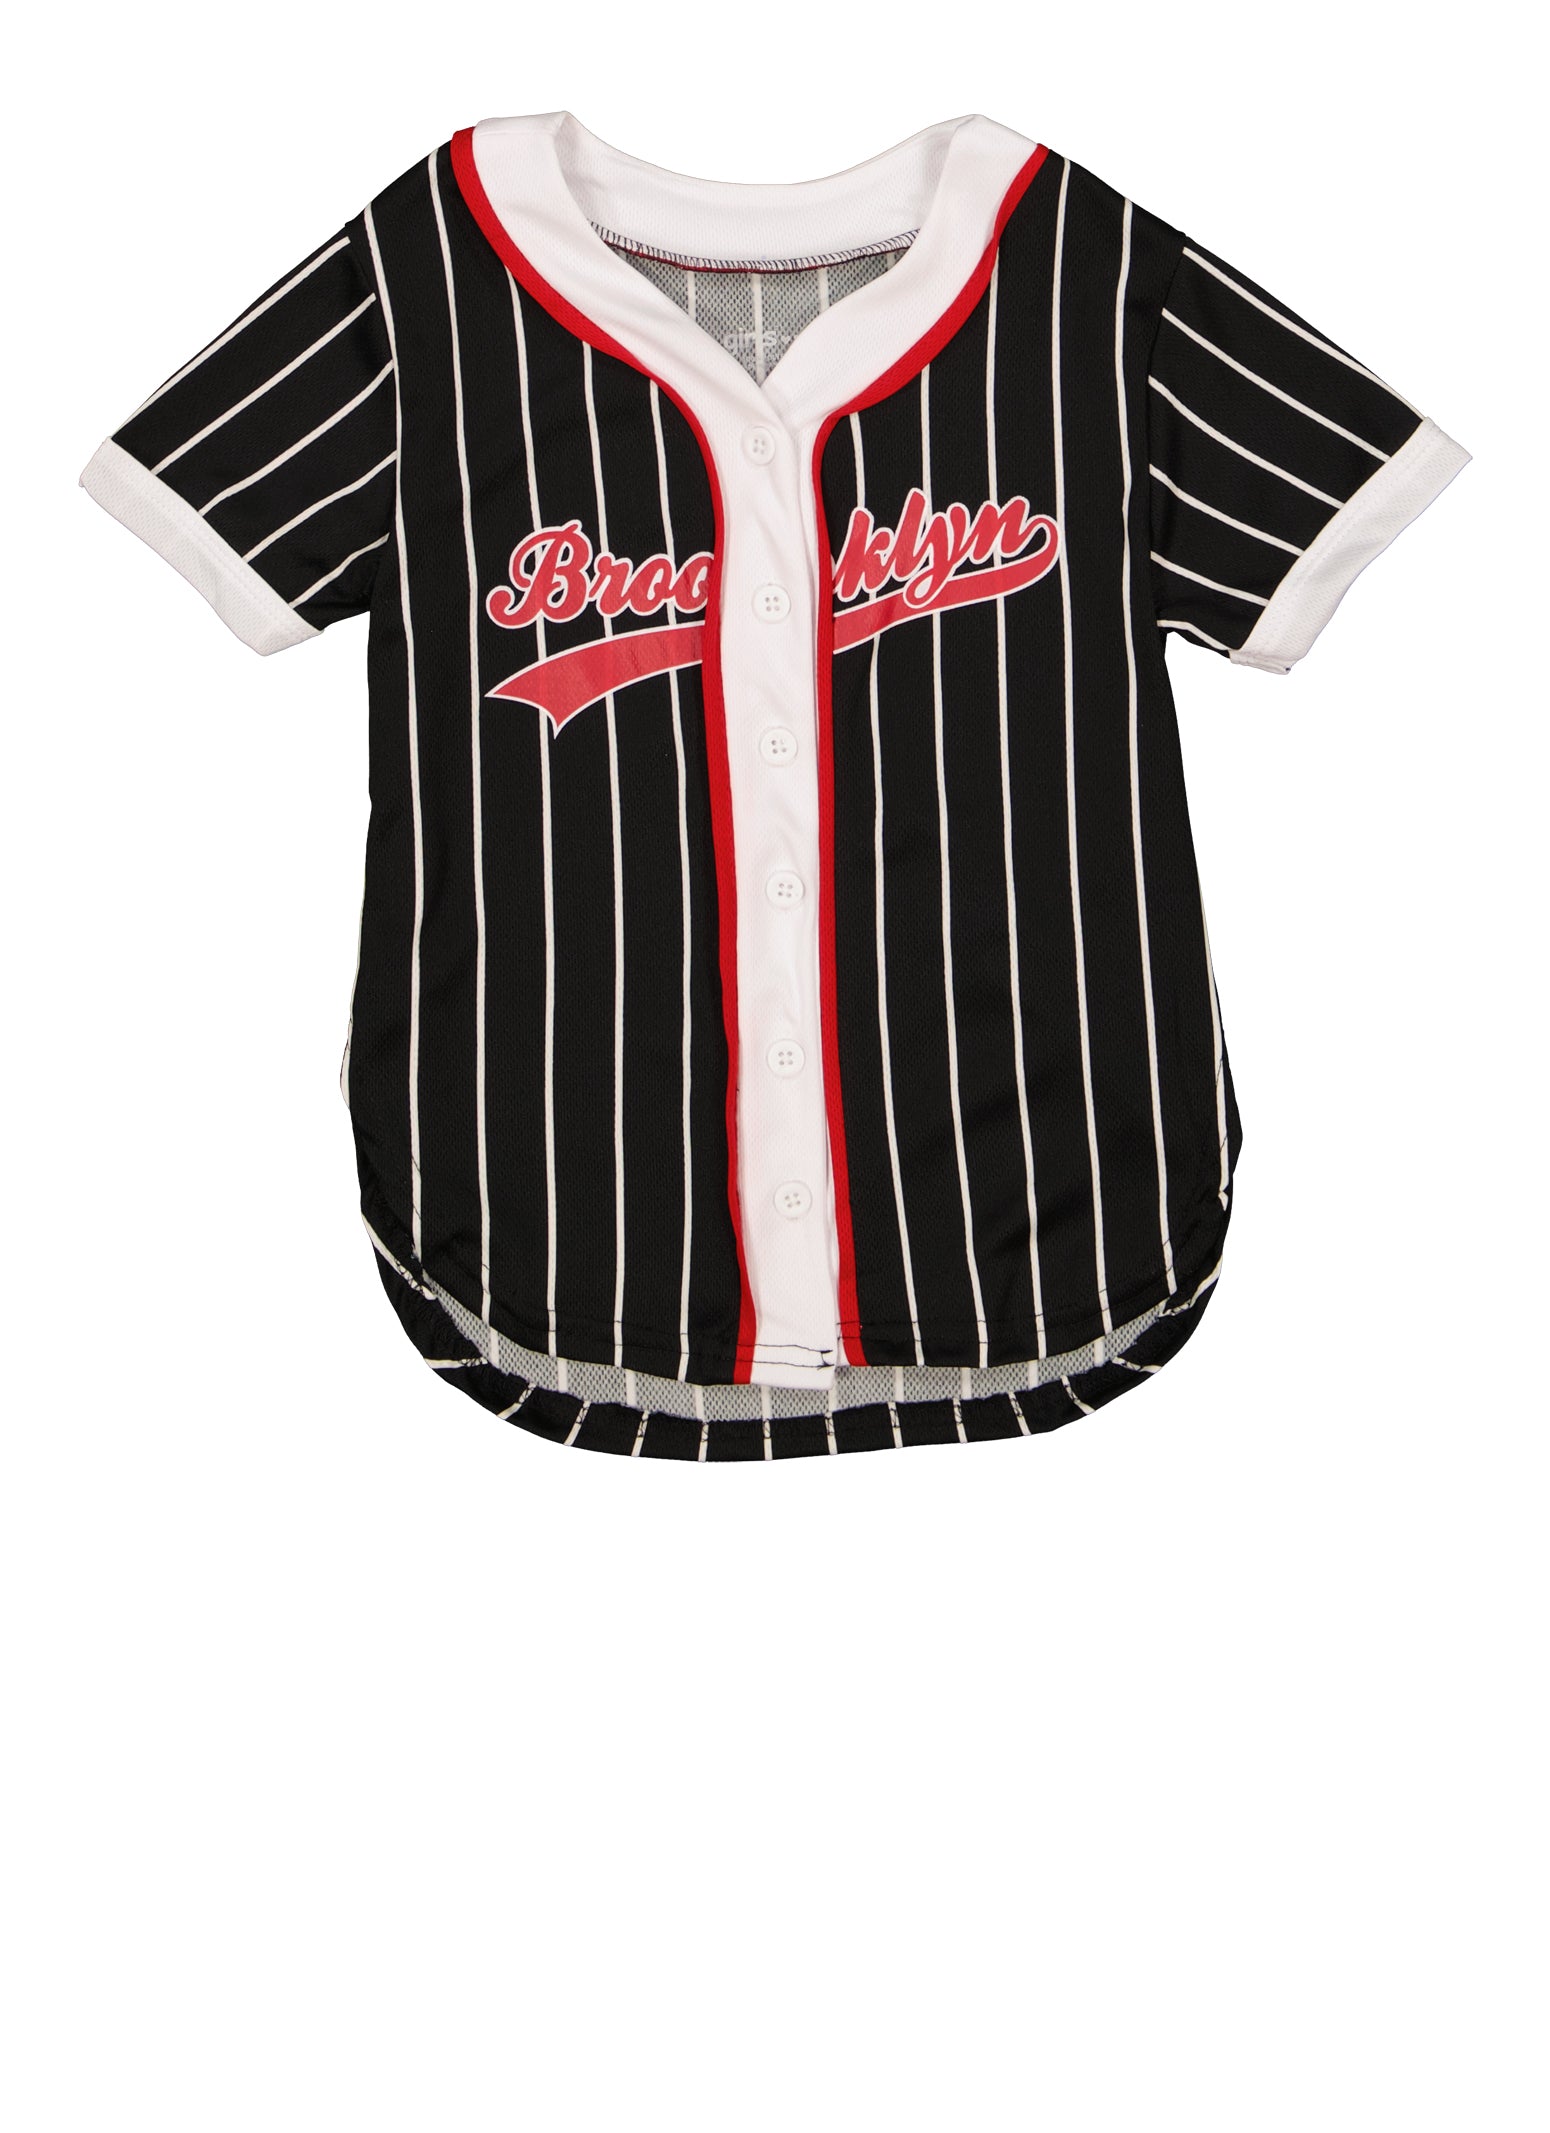 Little Girls Striped Brooklyn Graphic Baseball Jersey, Black, Size 4